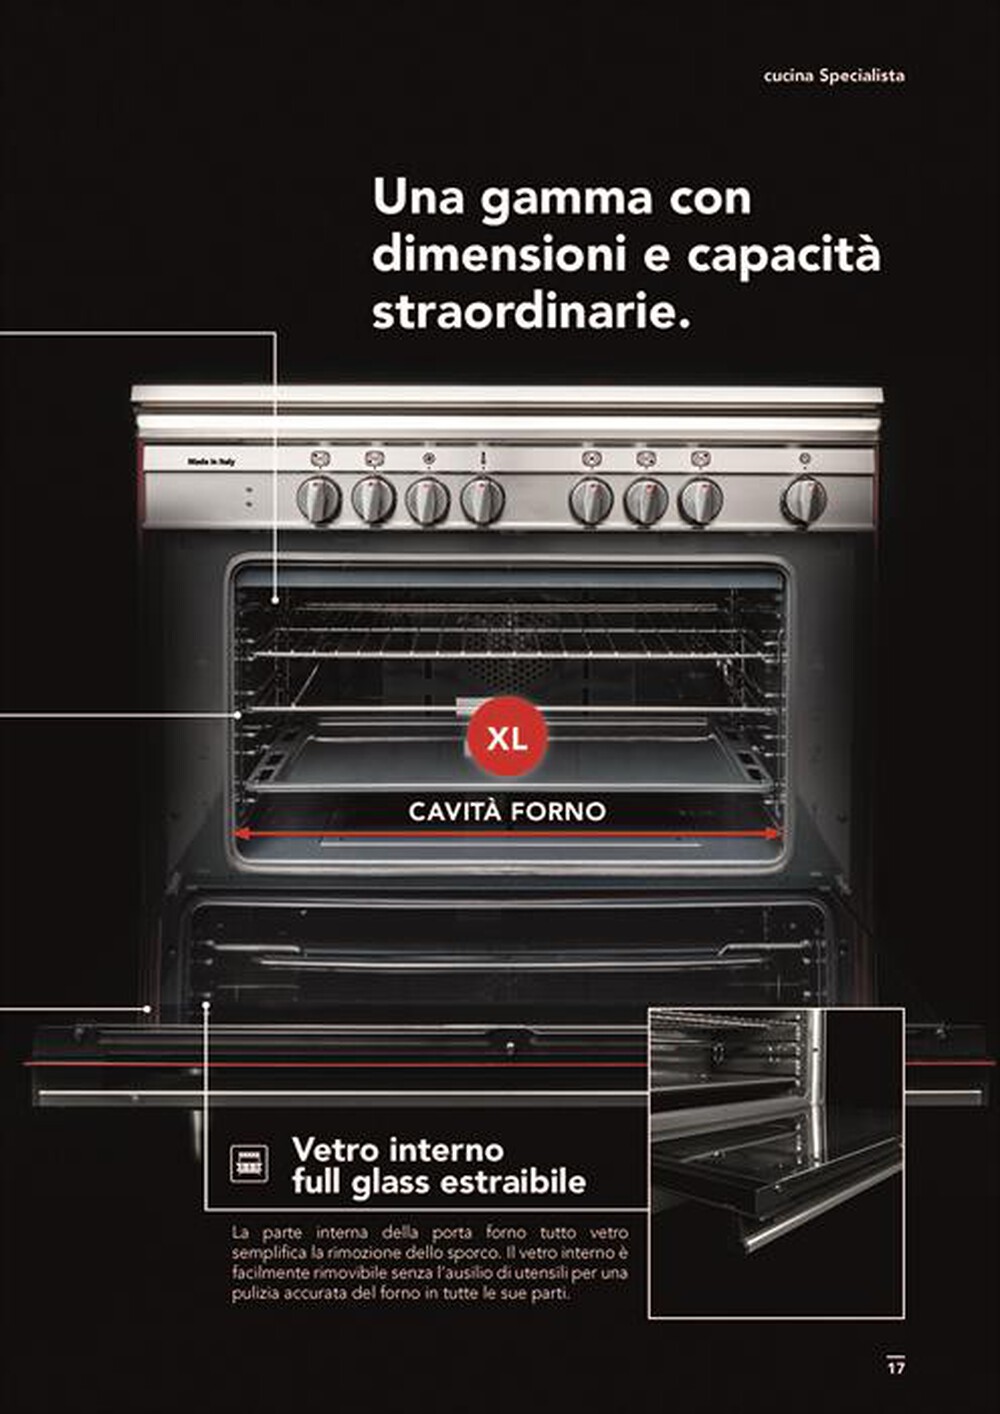 "GLEM GAS - Cucina elettrica SB965MCR Classe A+-Giallo Parmigiano"